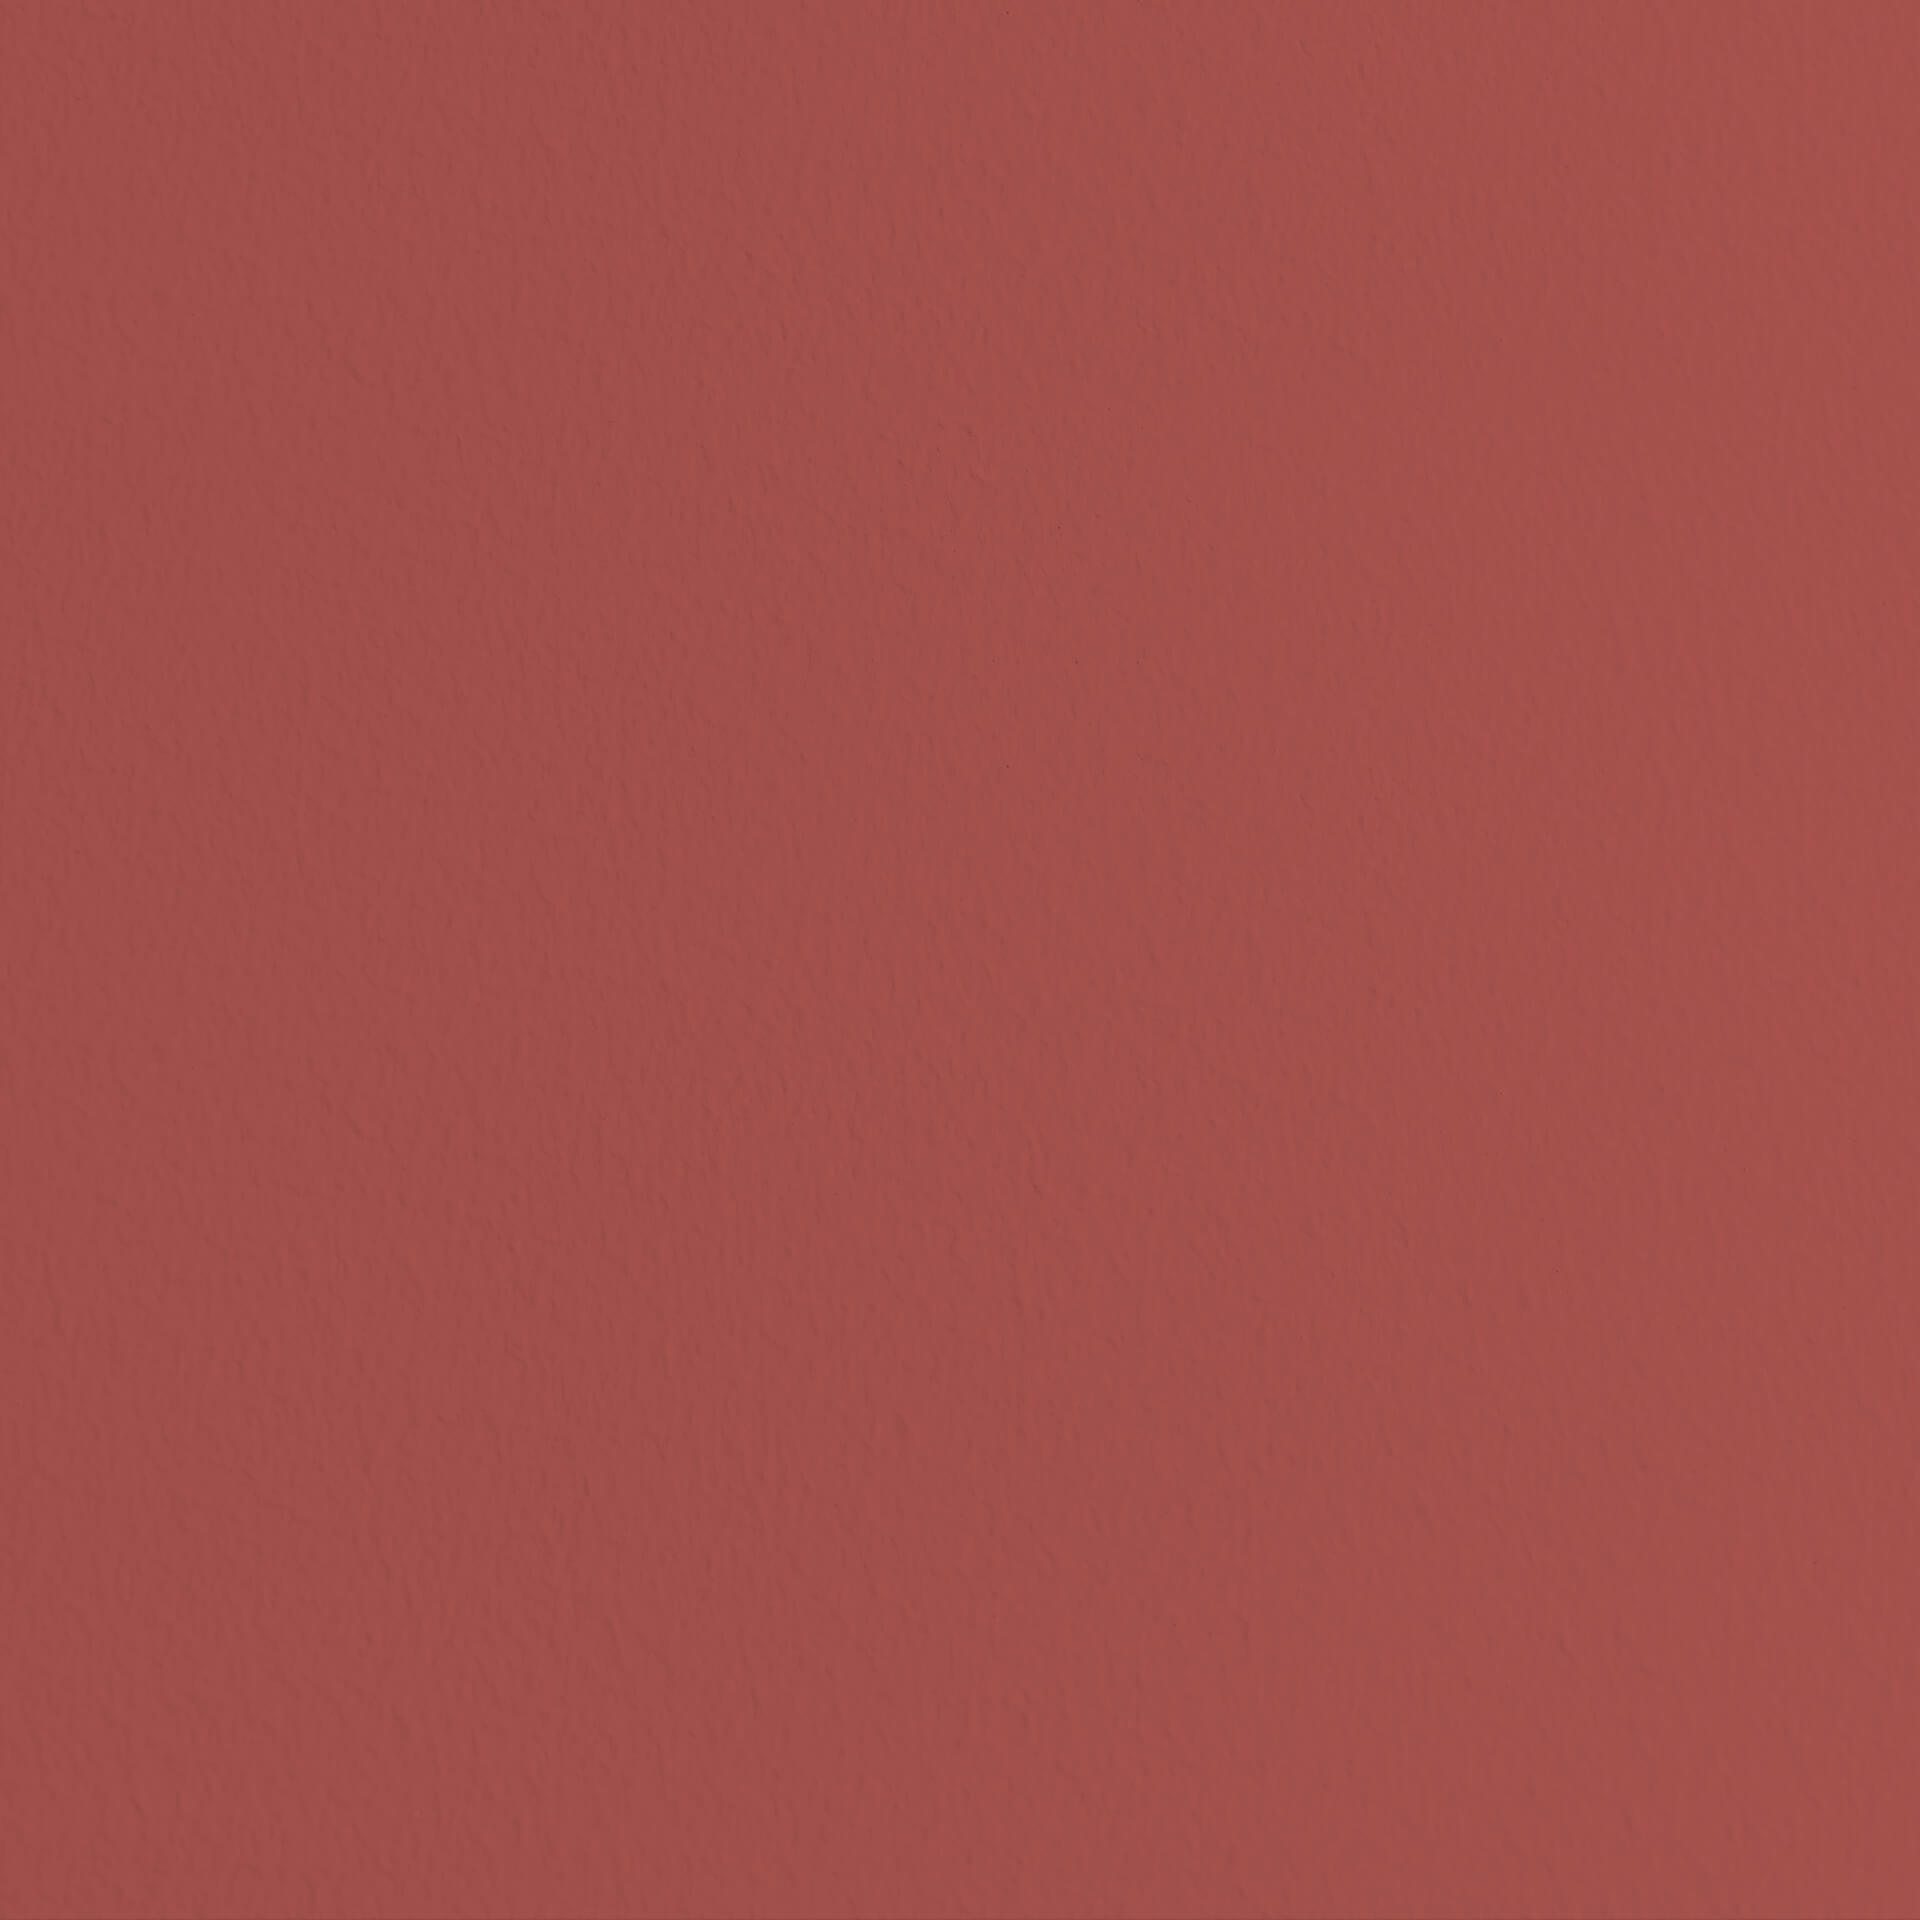 Mylands Mortlake Red No. 290 - Marble Matt Emulsion / Wandfarbe, 5L